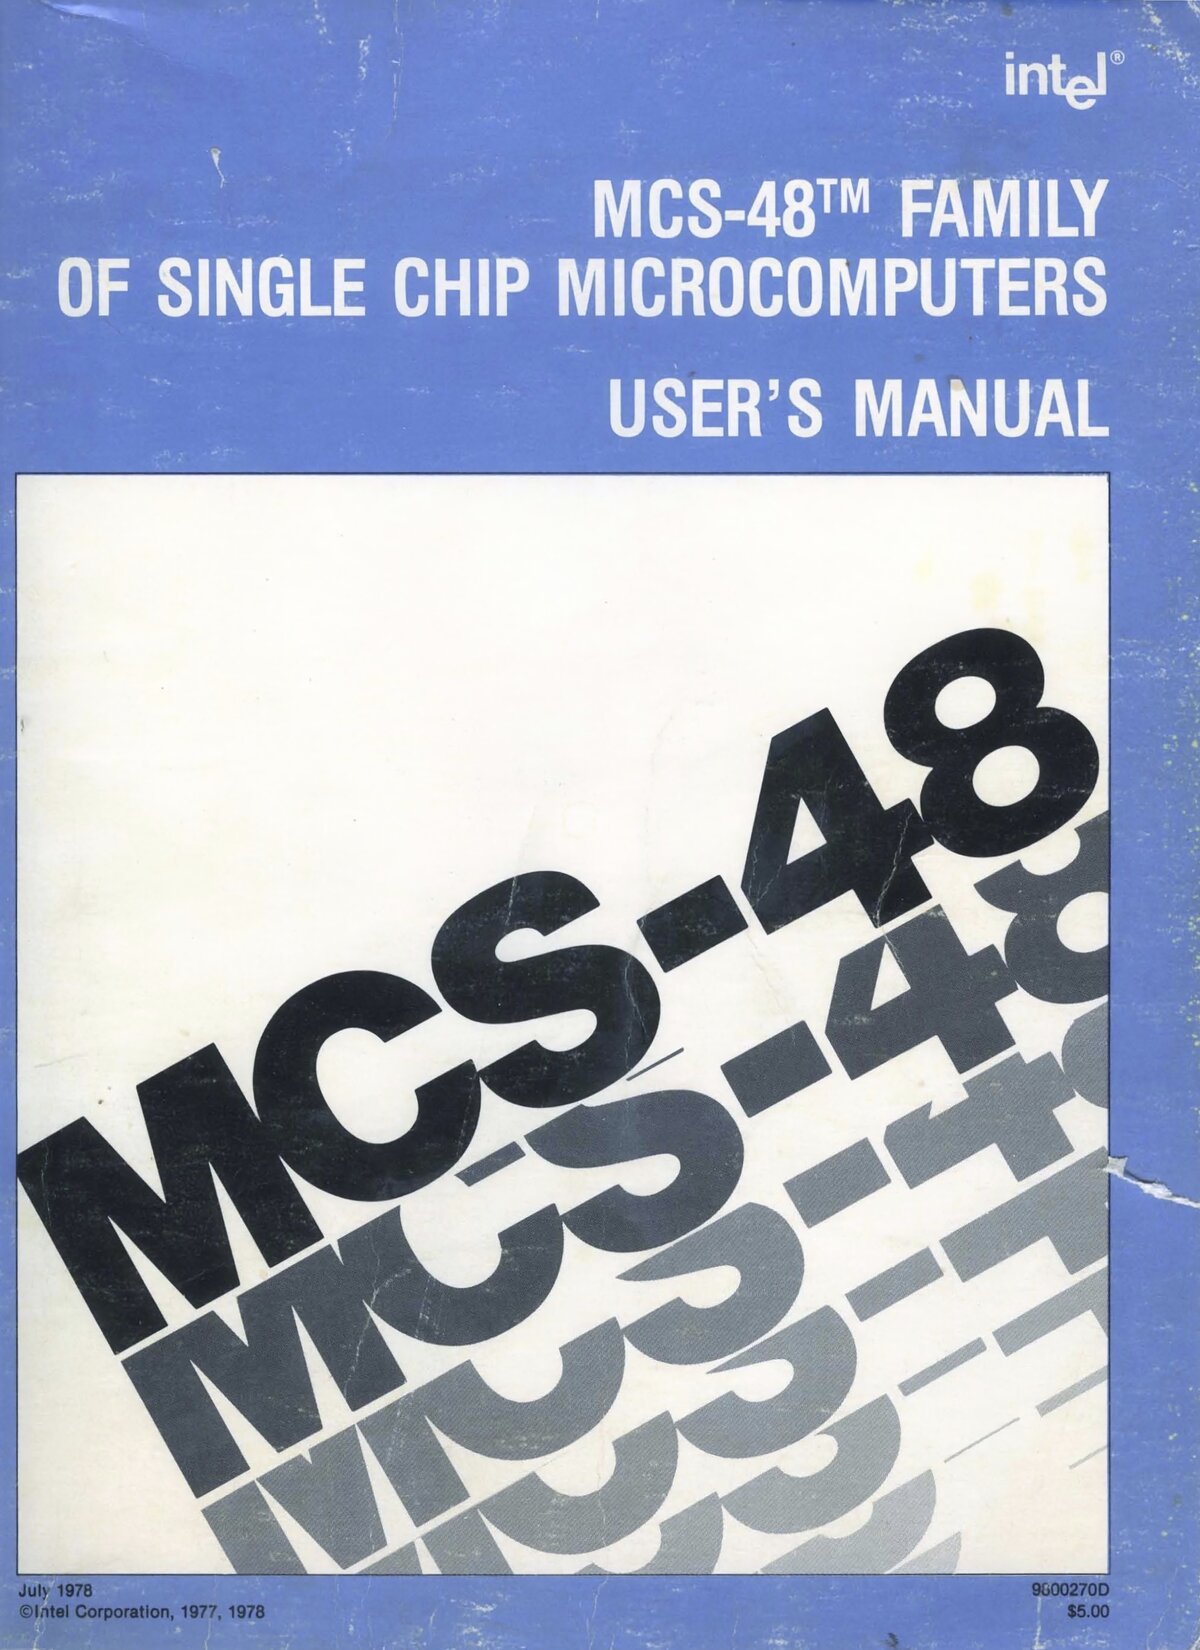 The Intel MCS-48 manual